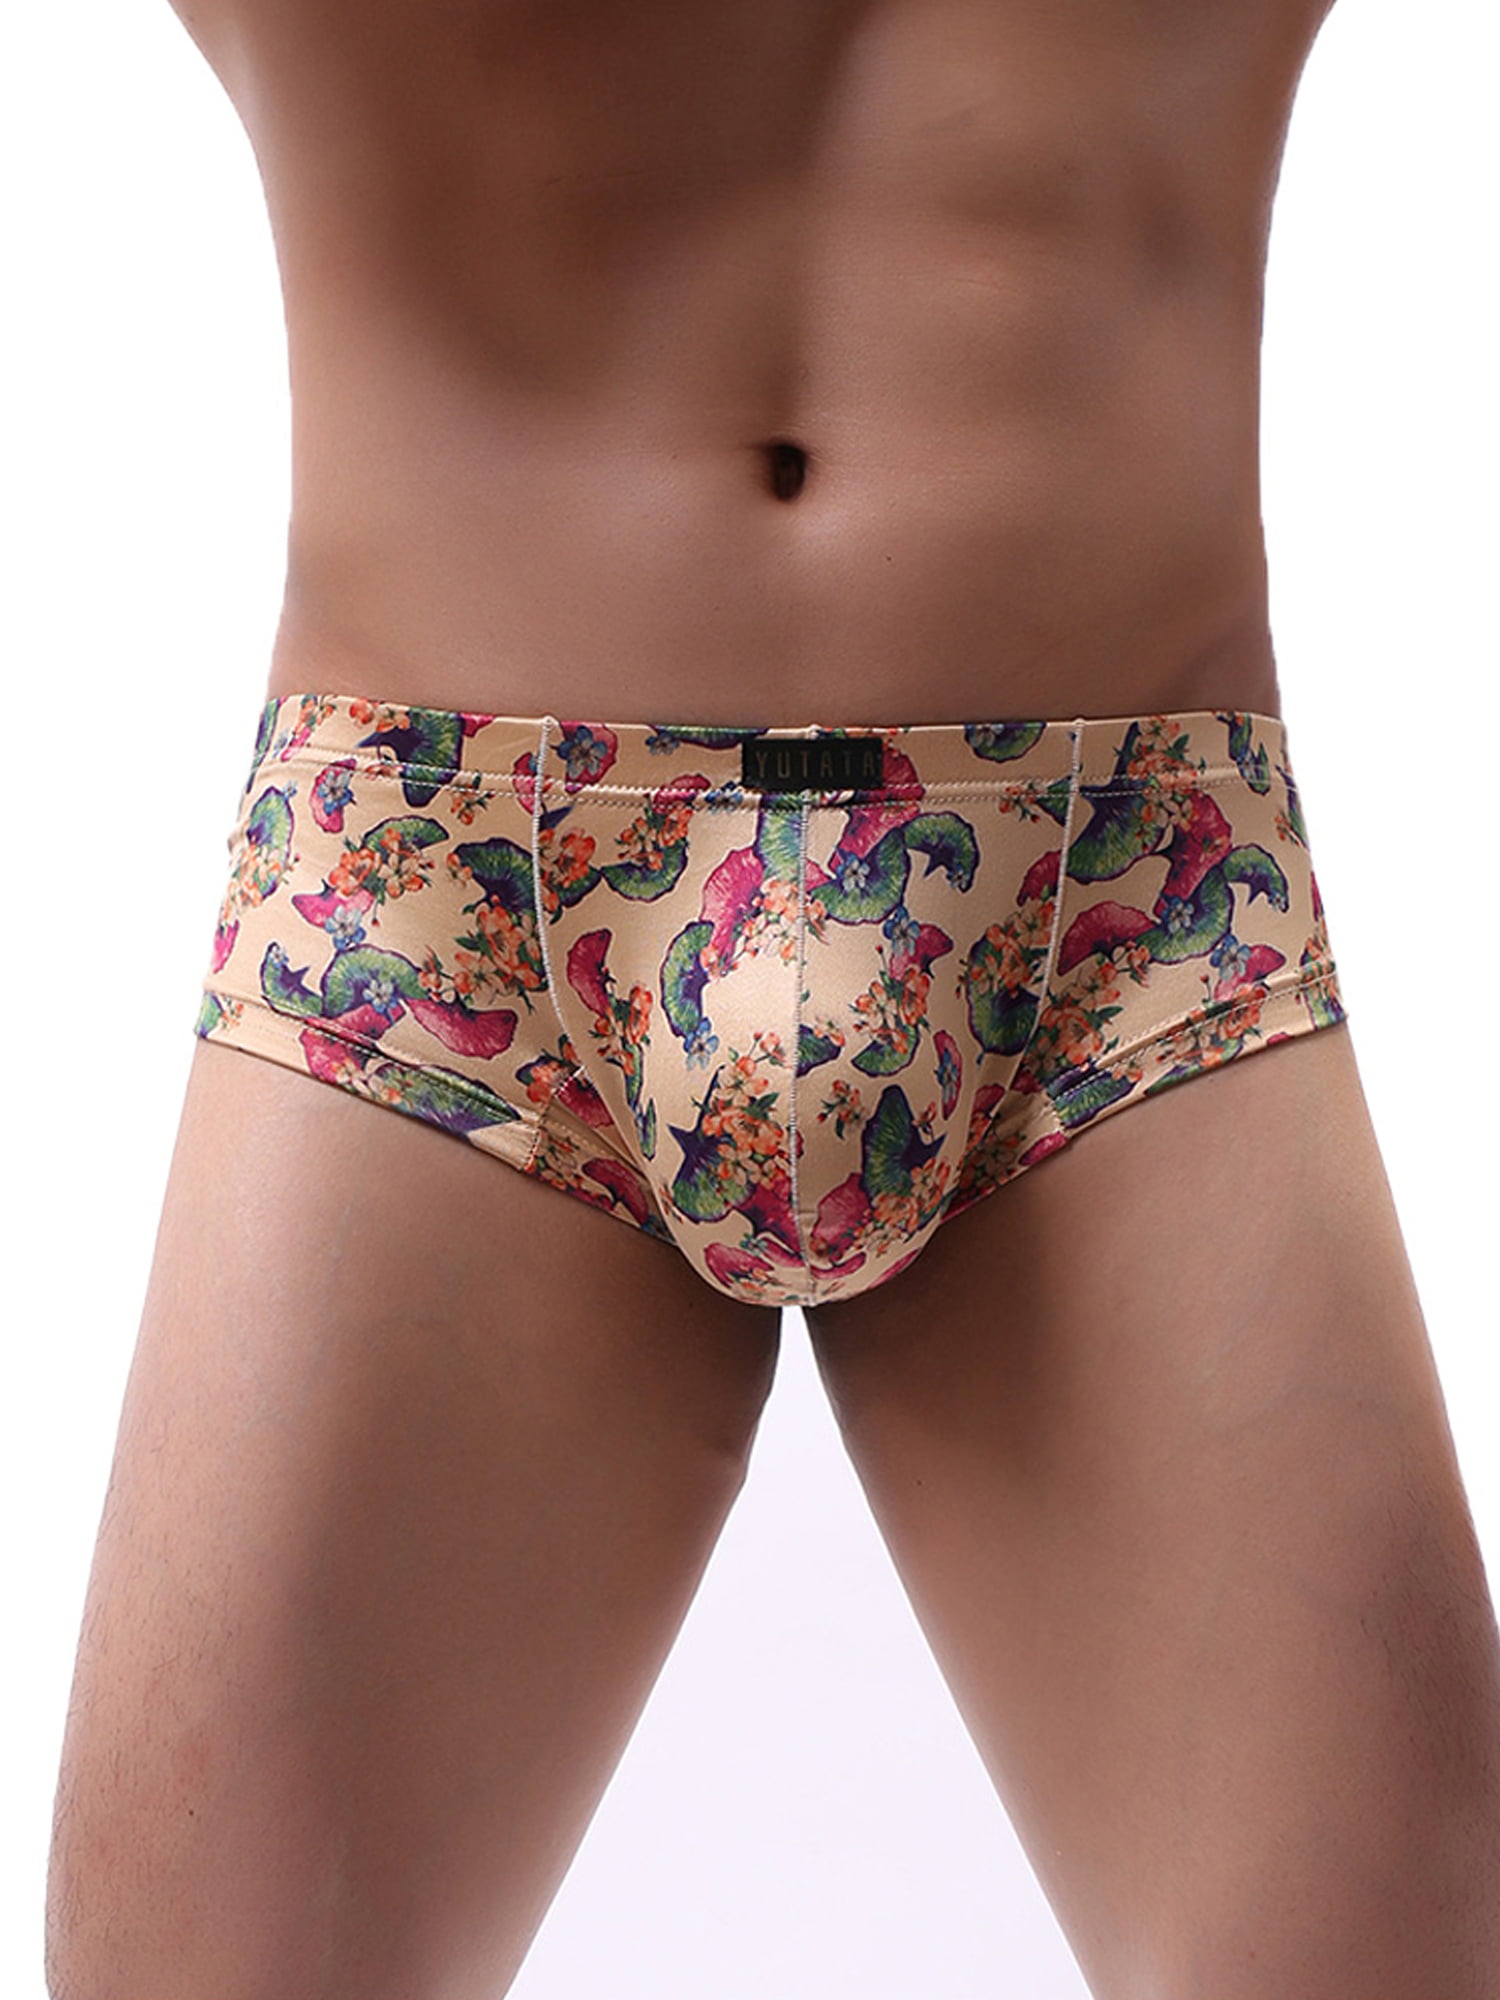 Cute Animals Floral Boxer Briefs Mens Underwear Pack Seamless Comfort Soft 